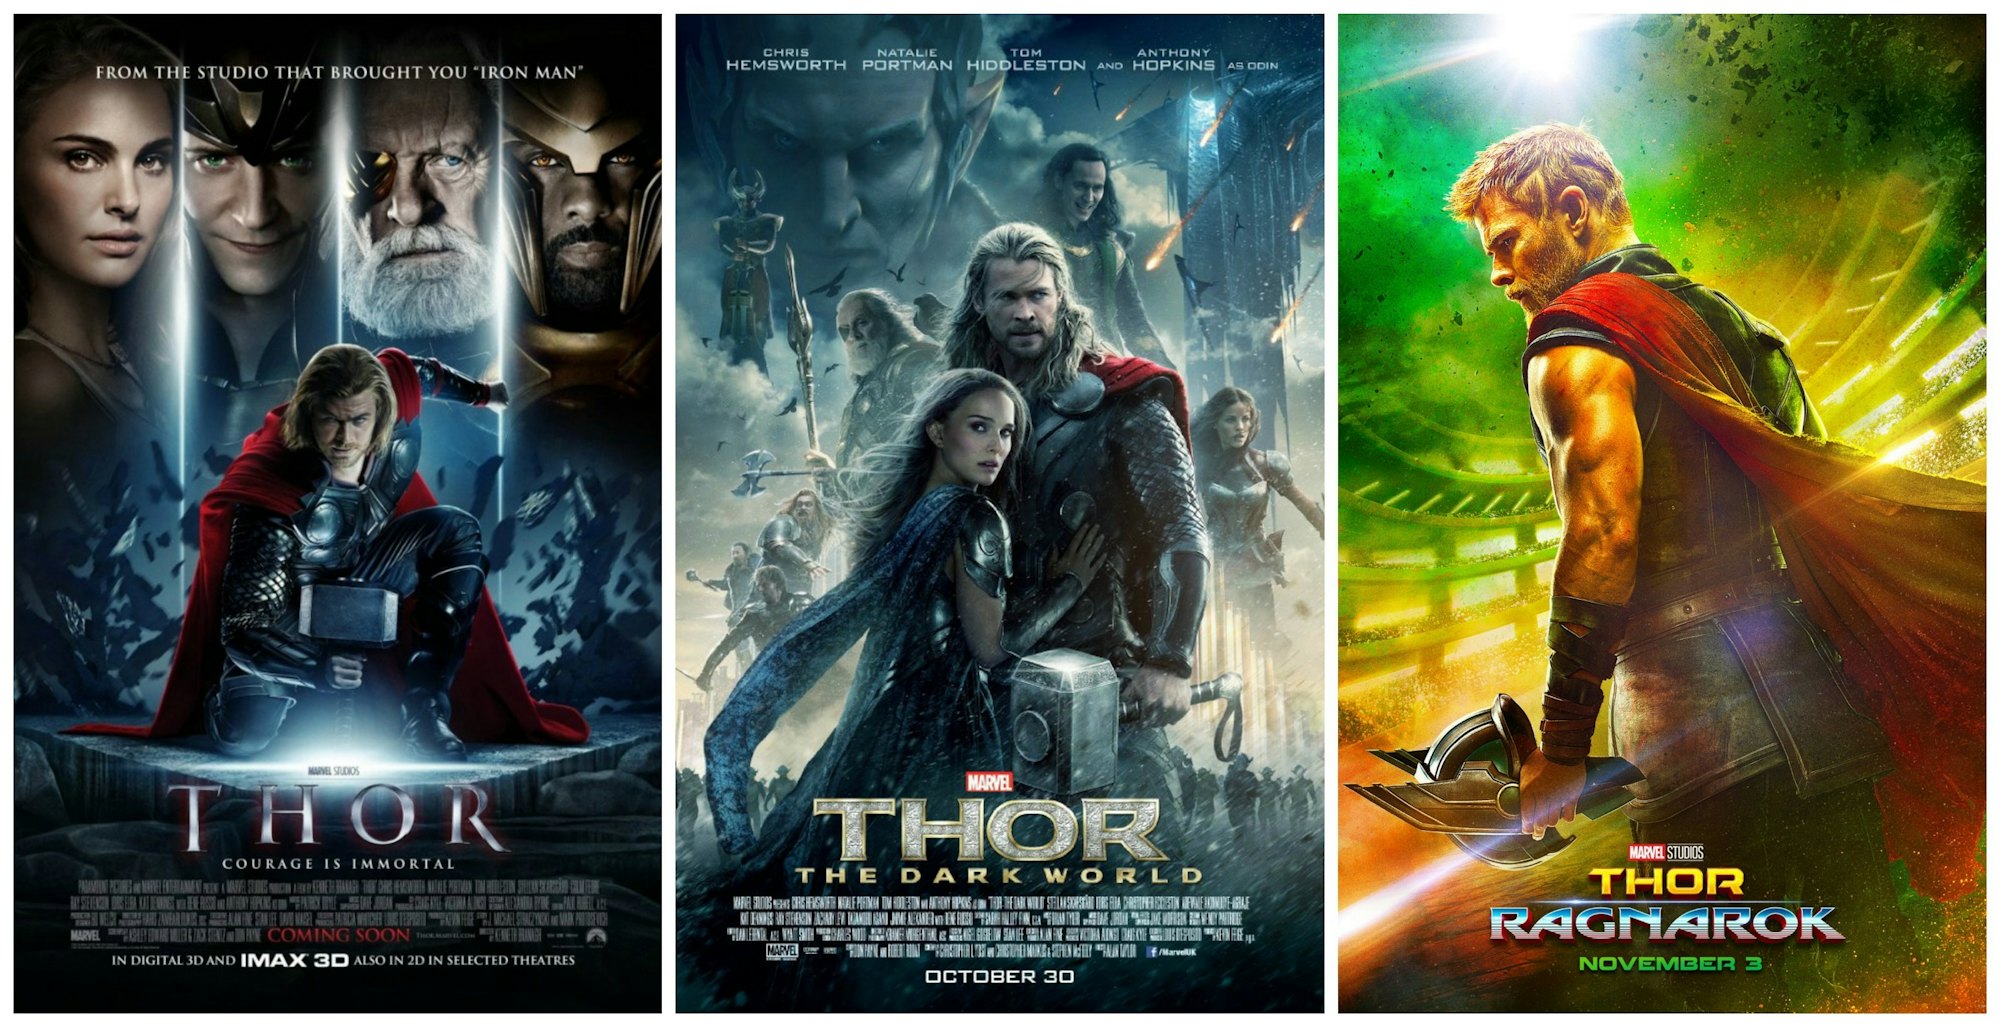 'Thor: Ragnarok' Poster Gives Off 'Gladiator' Vibes